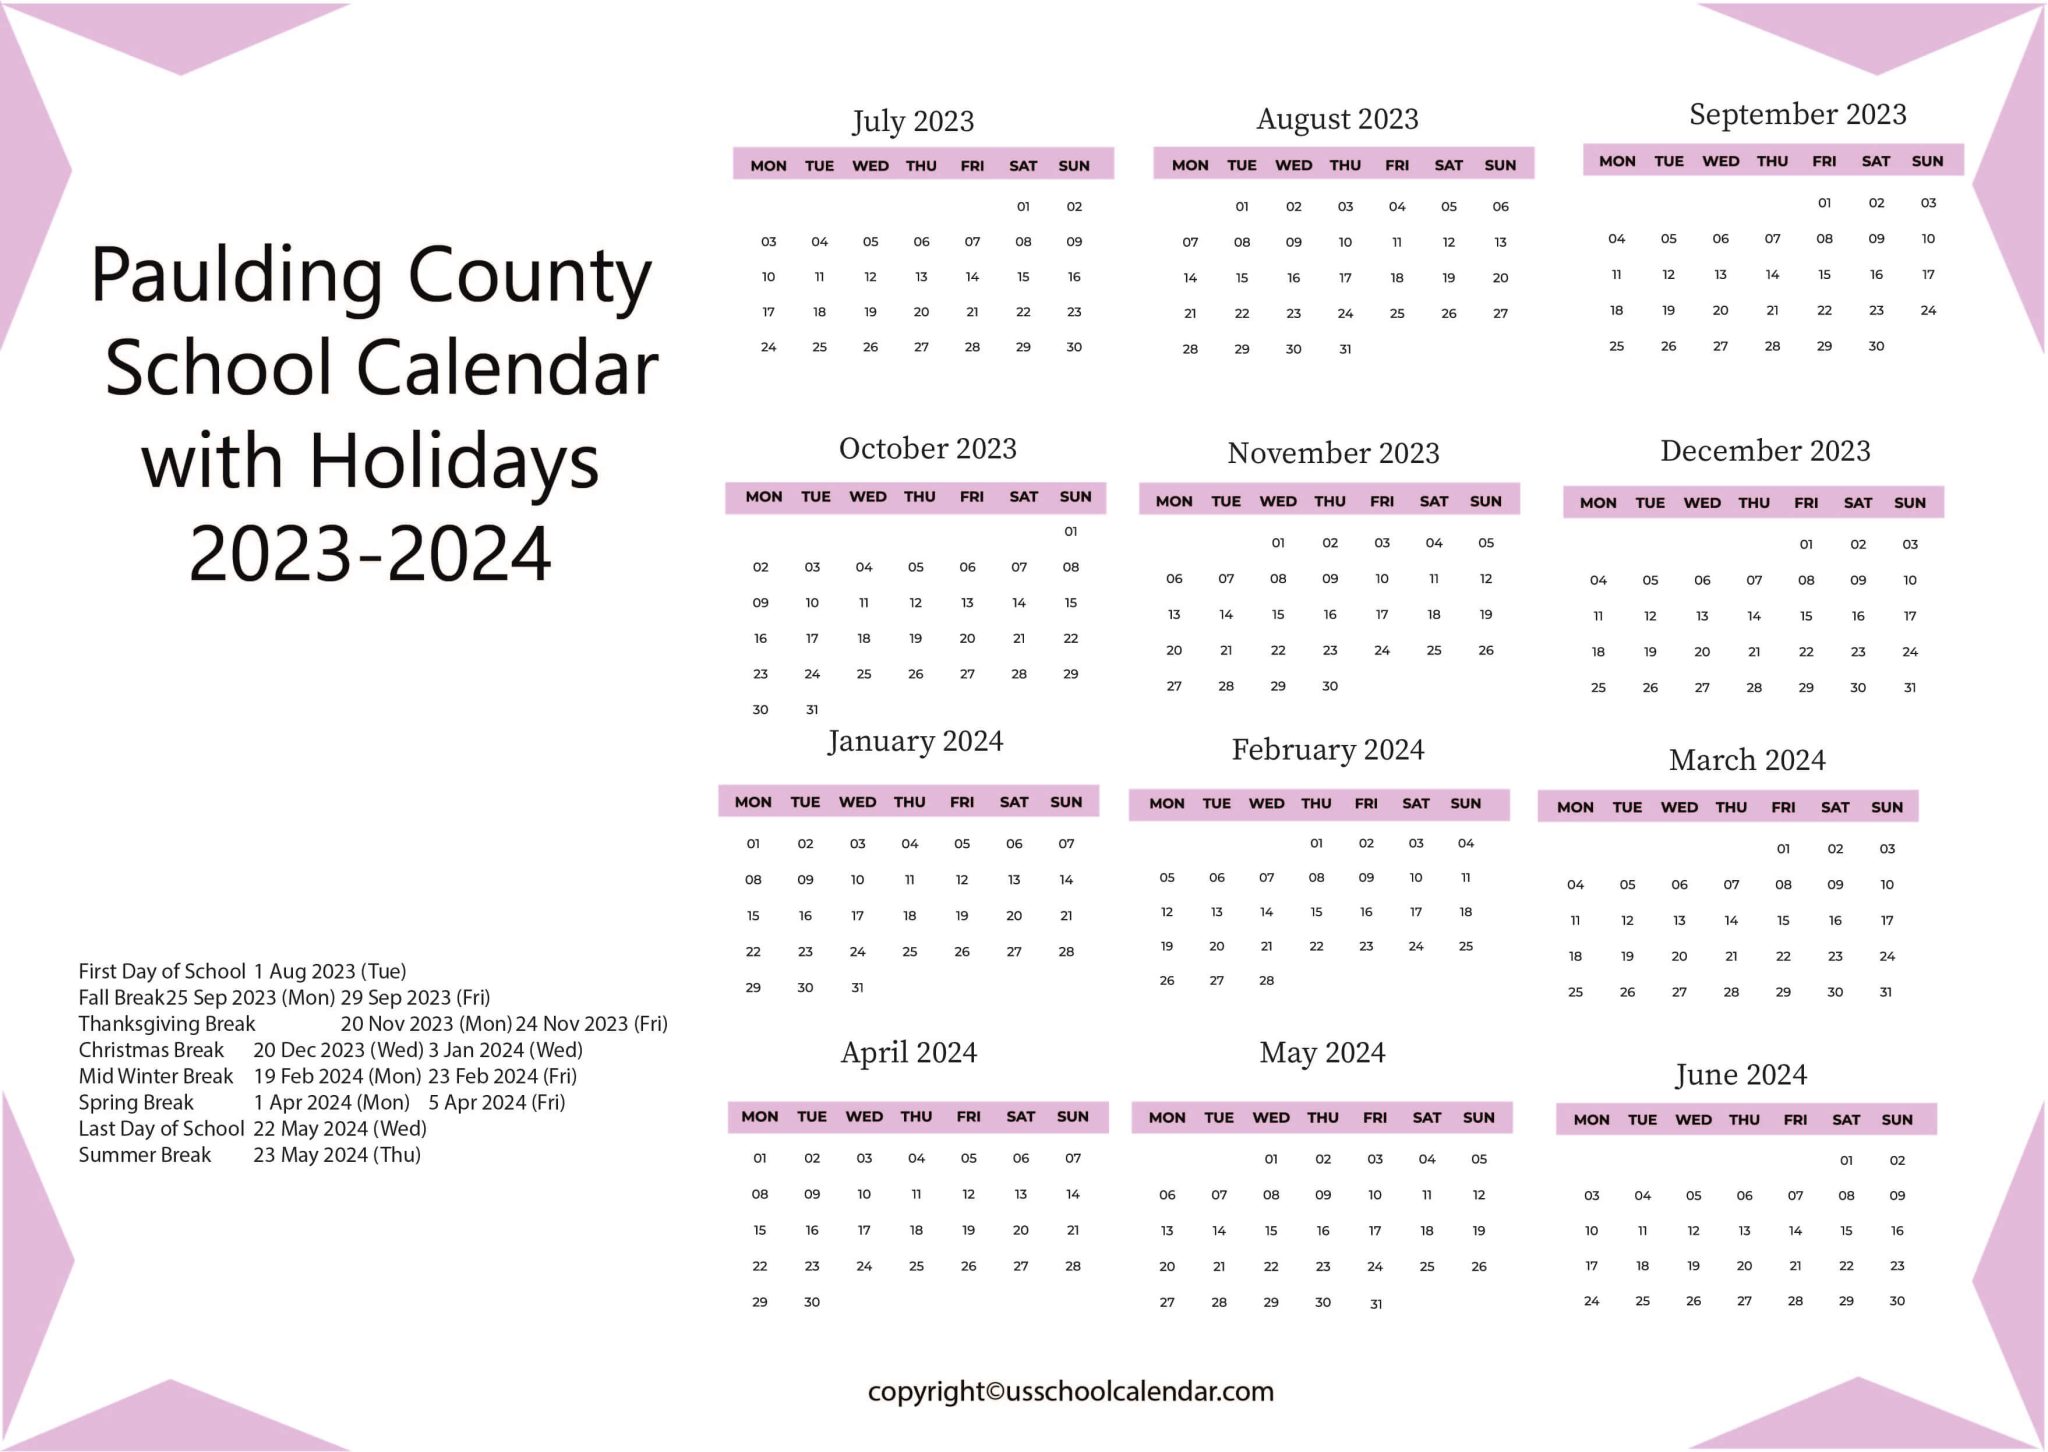 paulding-county-school-calendar-with-holidays-2023-2024